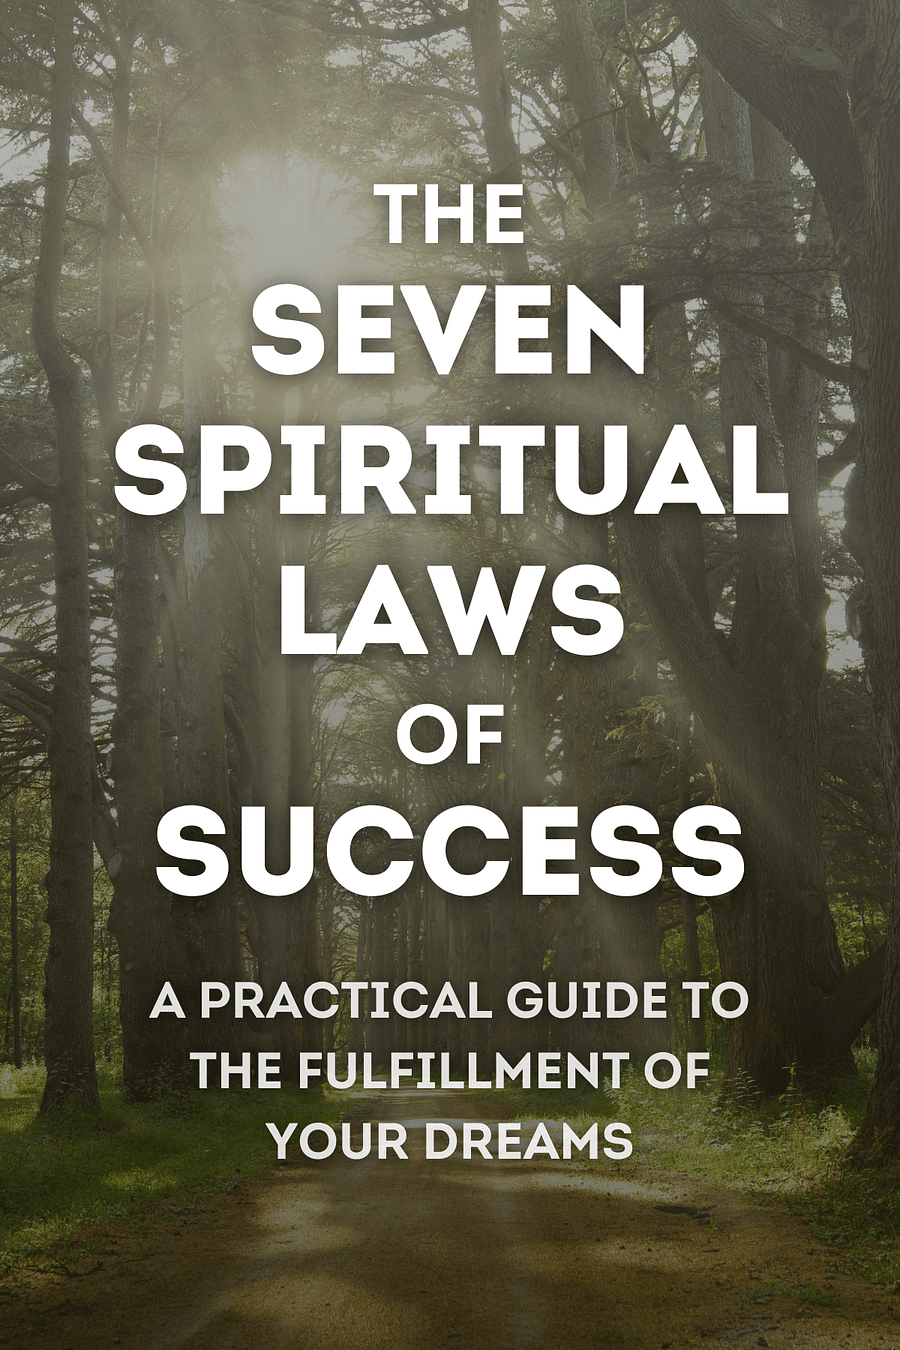 The Seven Spiritual Laws of Success by Deepak Chopra - Book Summary